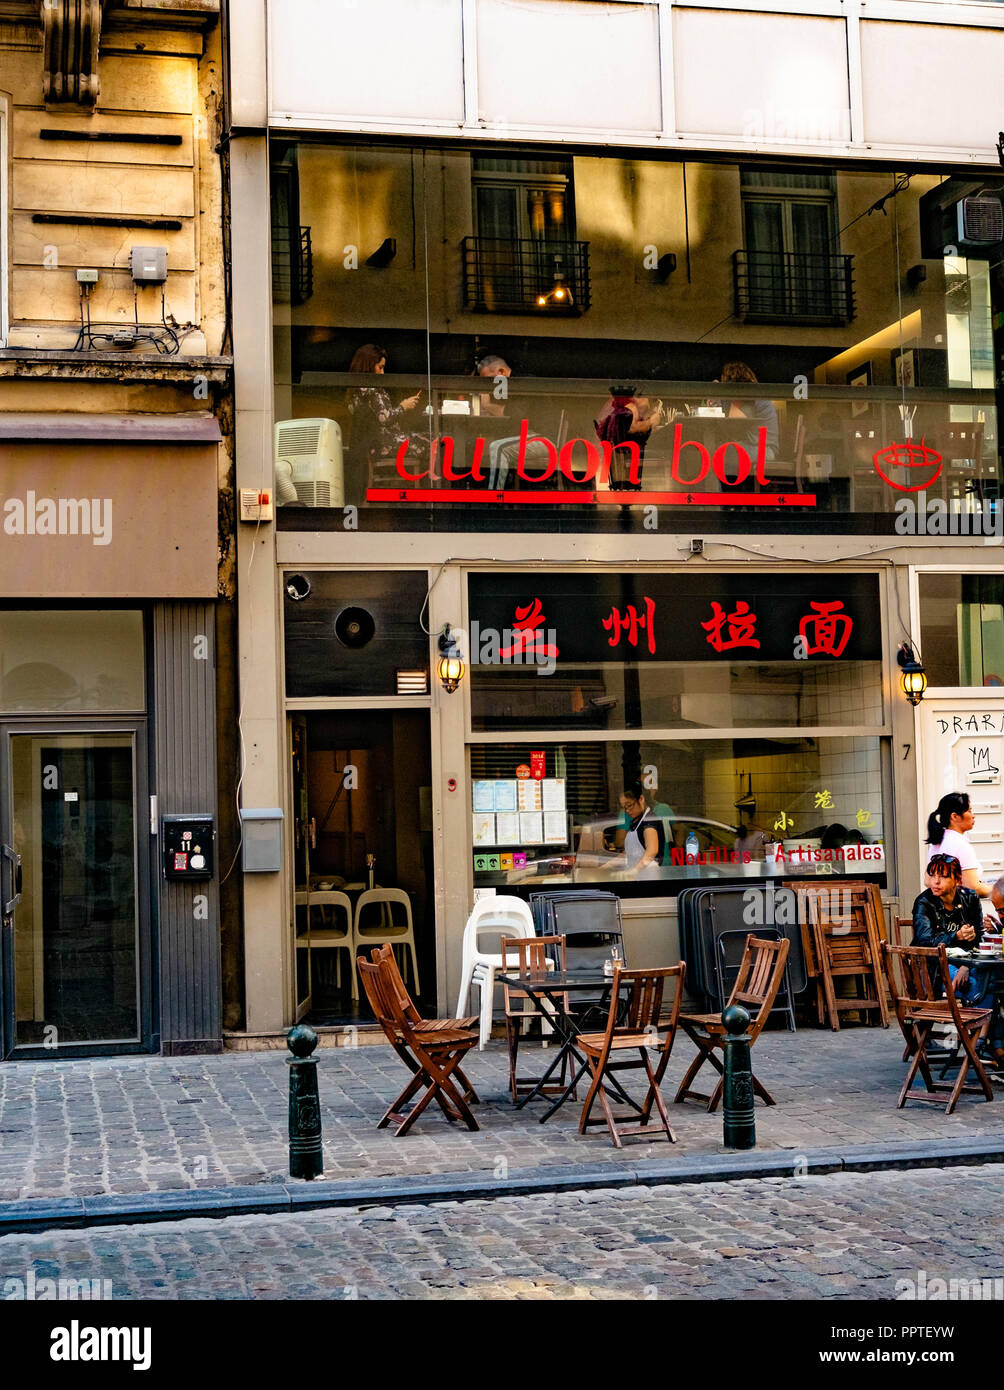 Au Bon Bol Noodle Bar, Brussels Stock Photo - Alamy